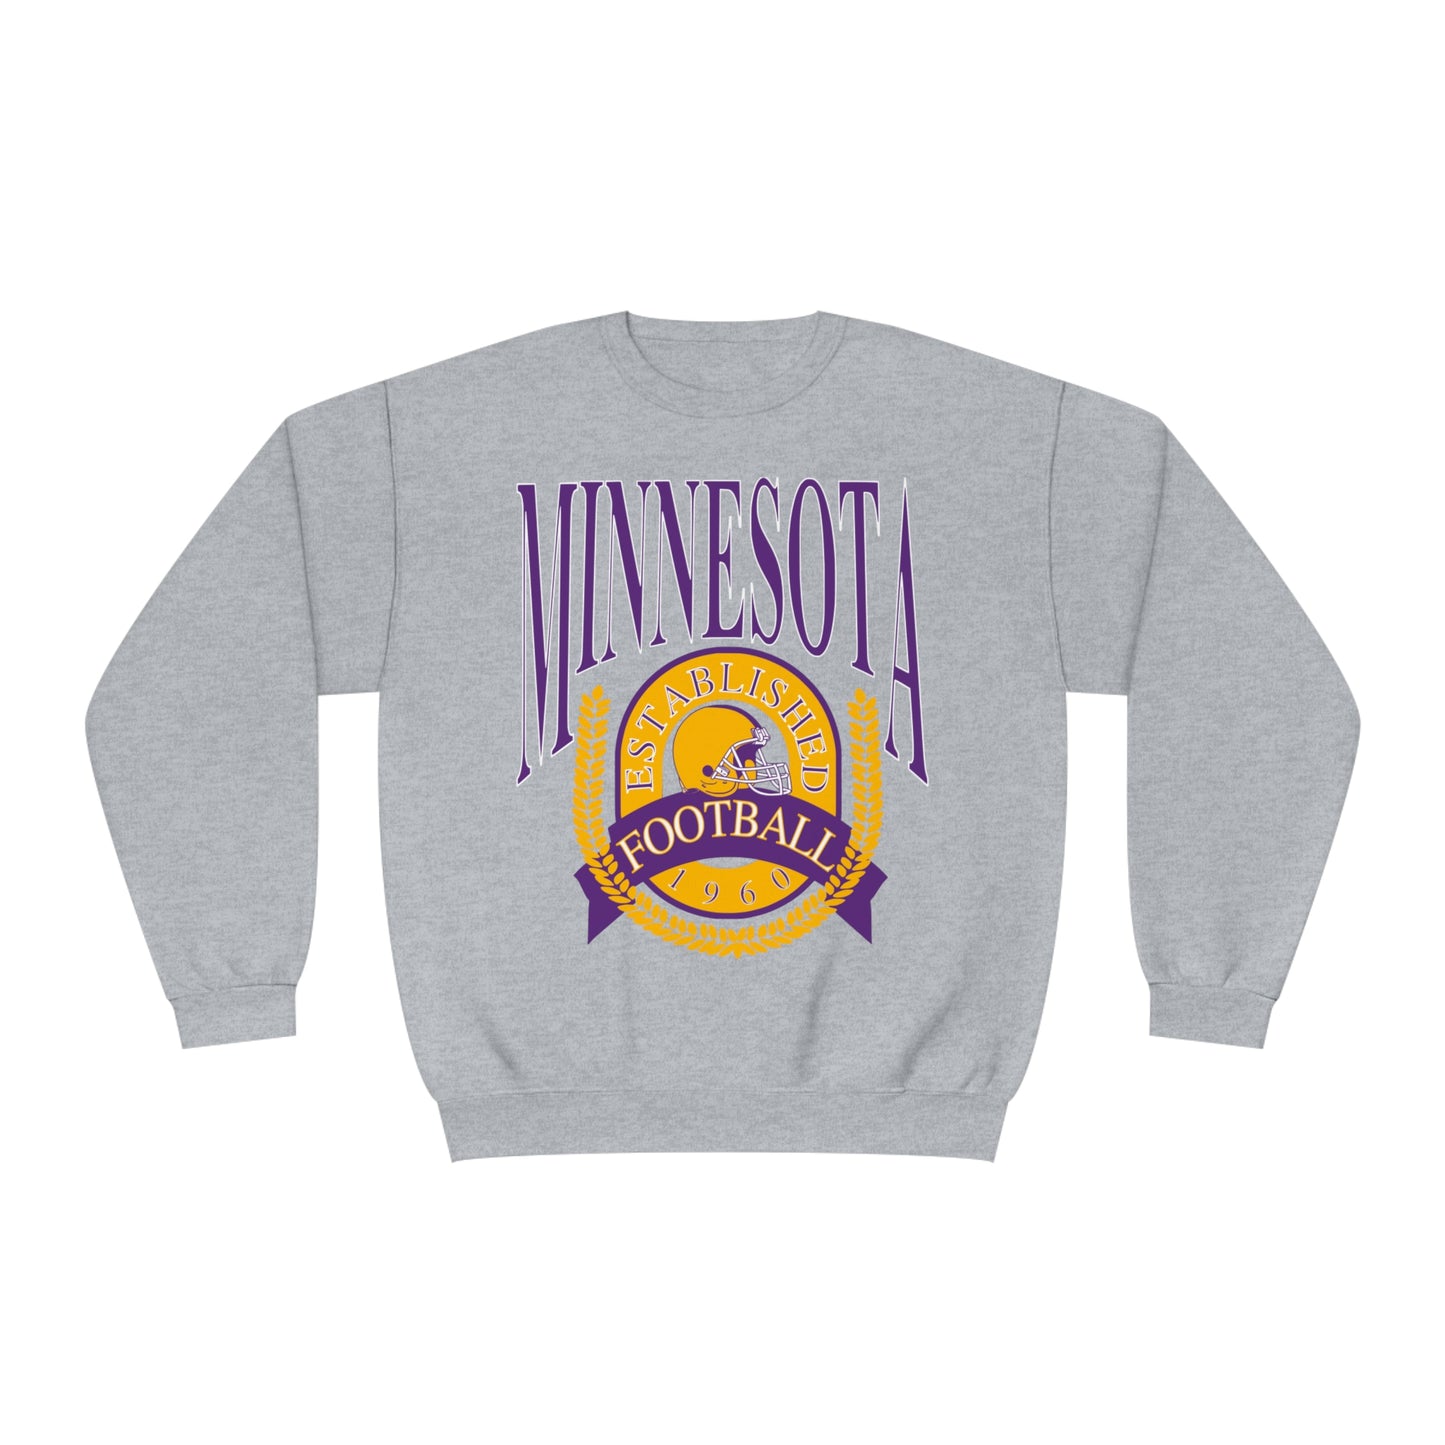 Vintage Minnesota Vikings Crewneck - Retro Unisex Football Sweatshirt - Men's & Women's 90's Oversized Hoodie - Design 1